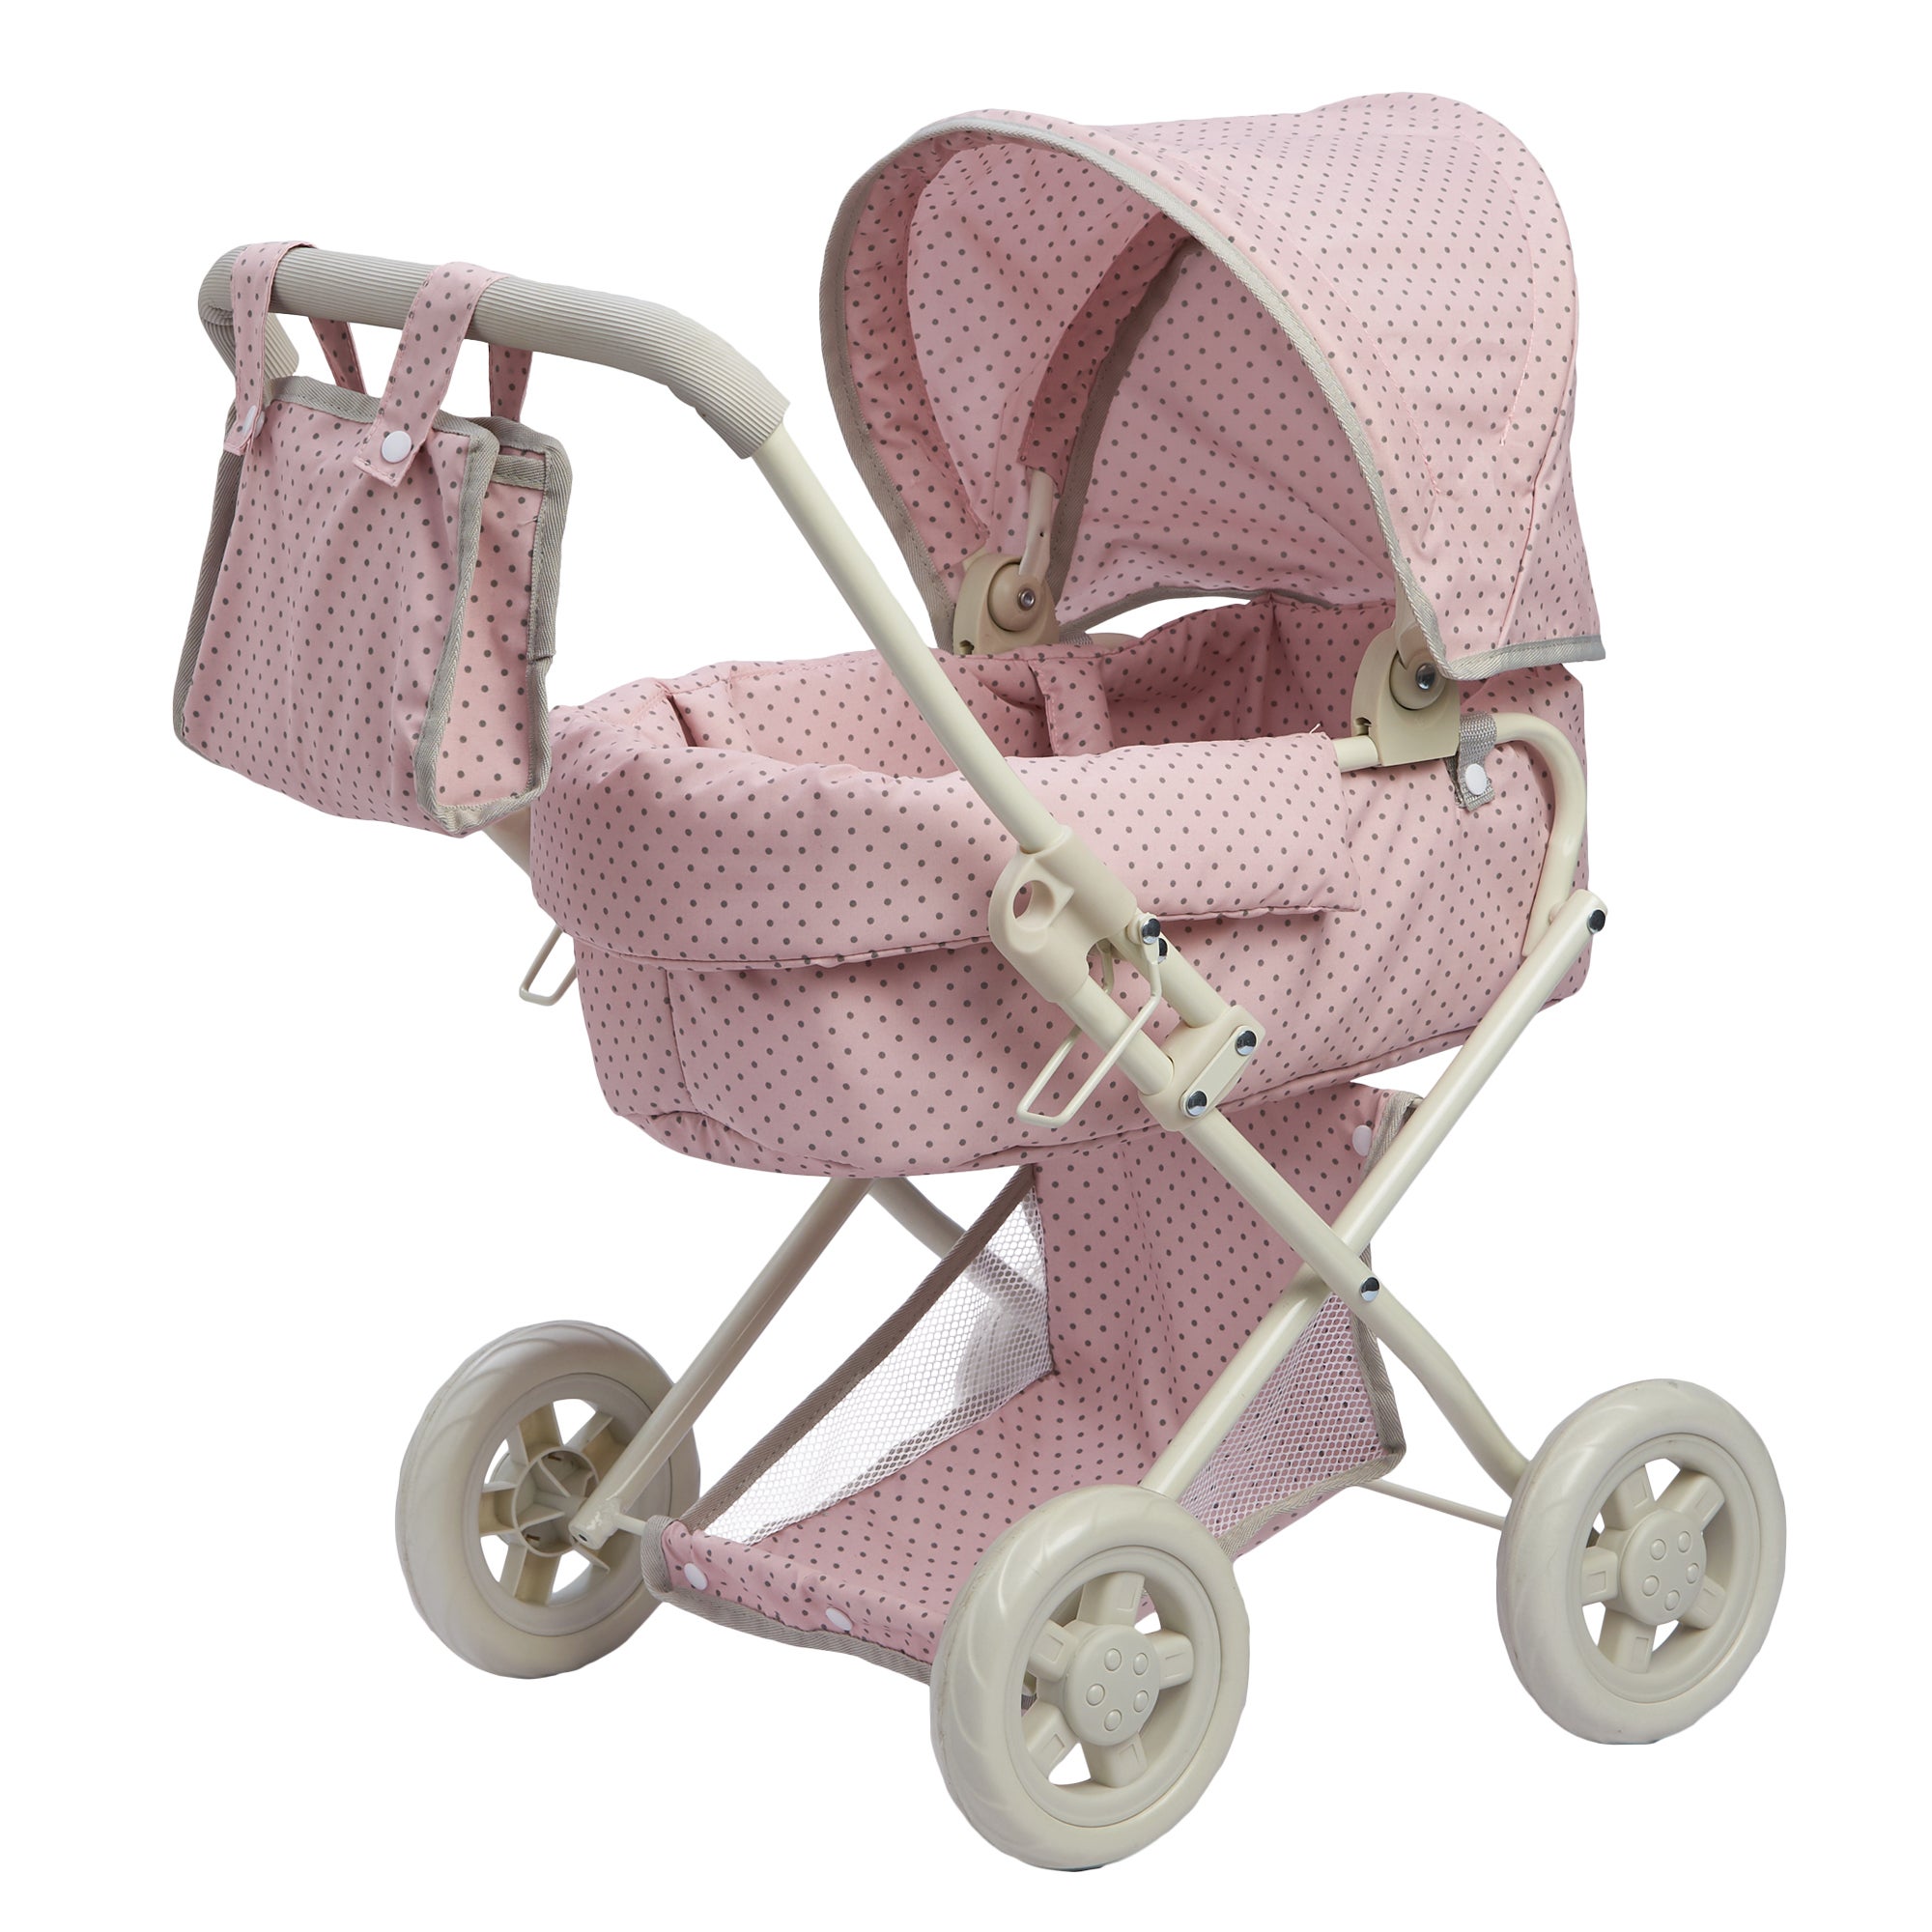 Teamson Kids - Polka Dots Princess Baby Doll Deluxe Stroller - Pink & Grey